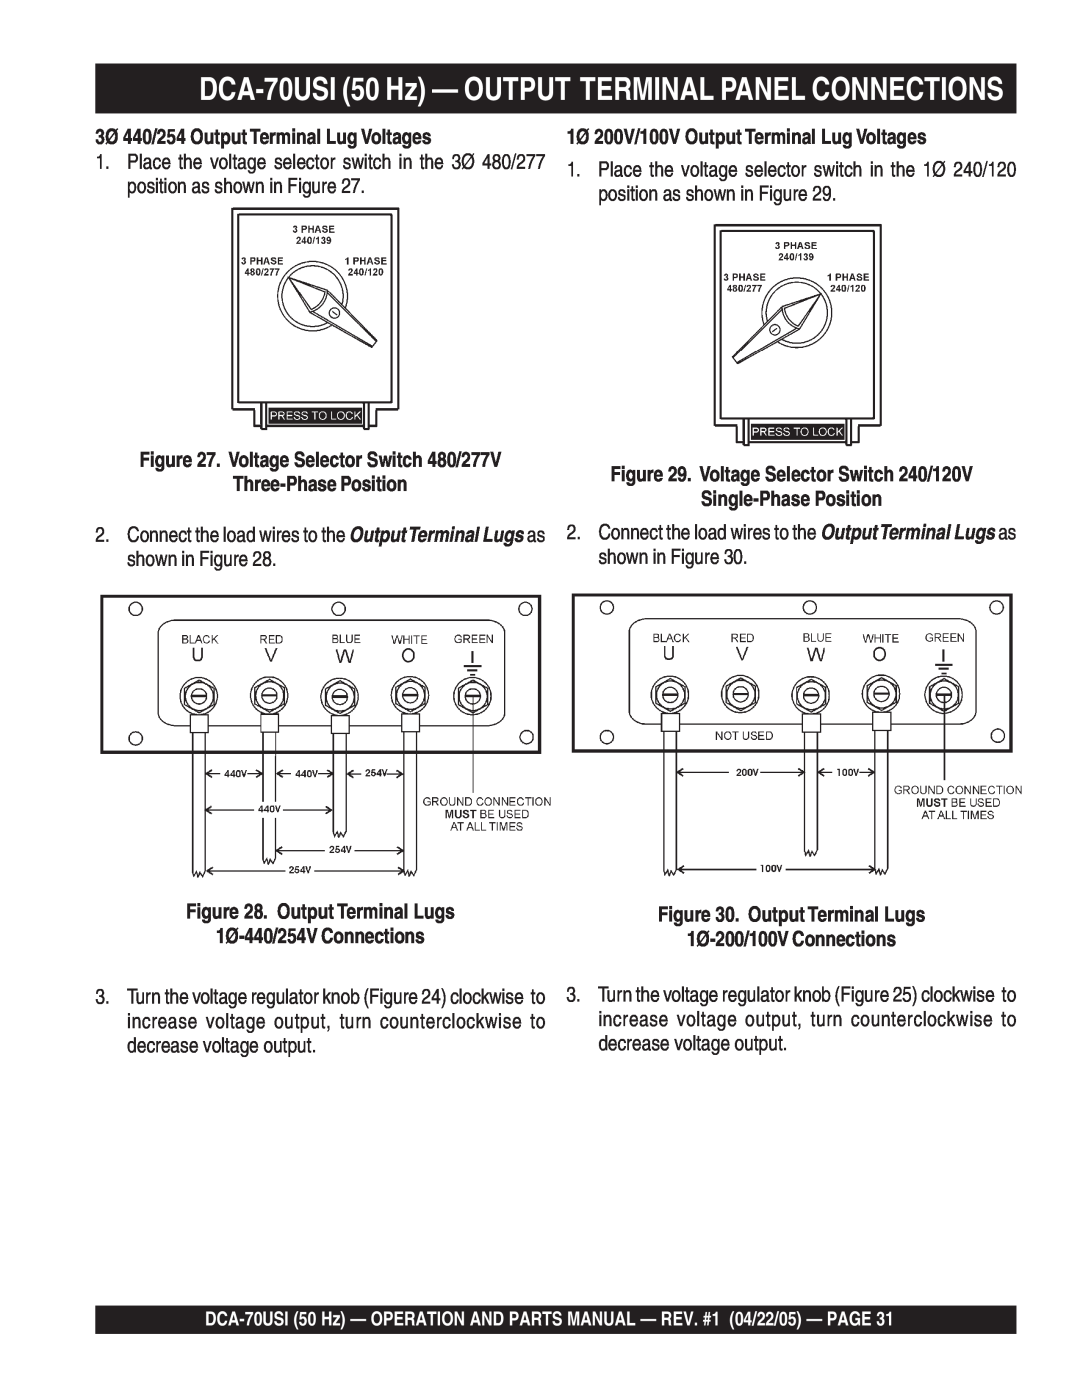 Multiquip DCA-70USI operation manual 3Ø 440/254 Output Terminal Lug Voltages, 1Ø 200V/100V Output Terminal Lug Voltages 